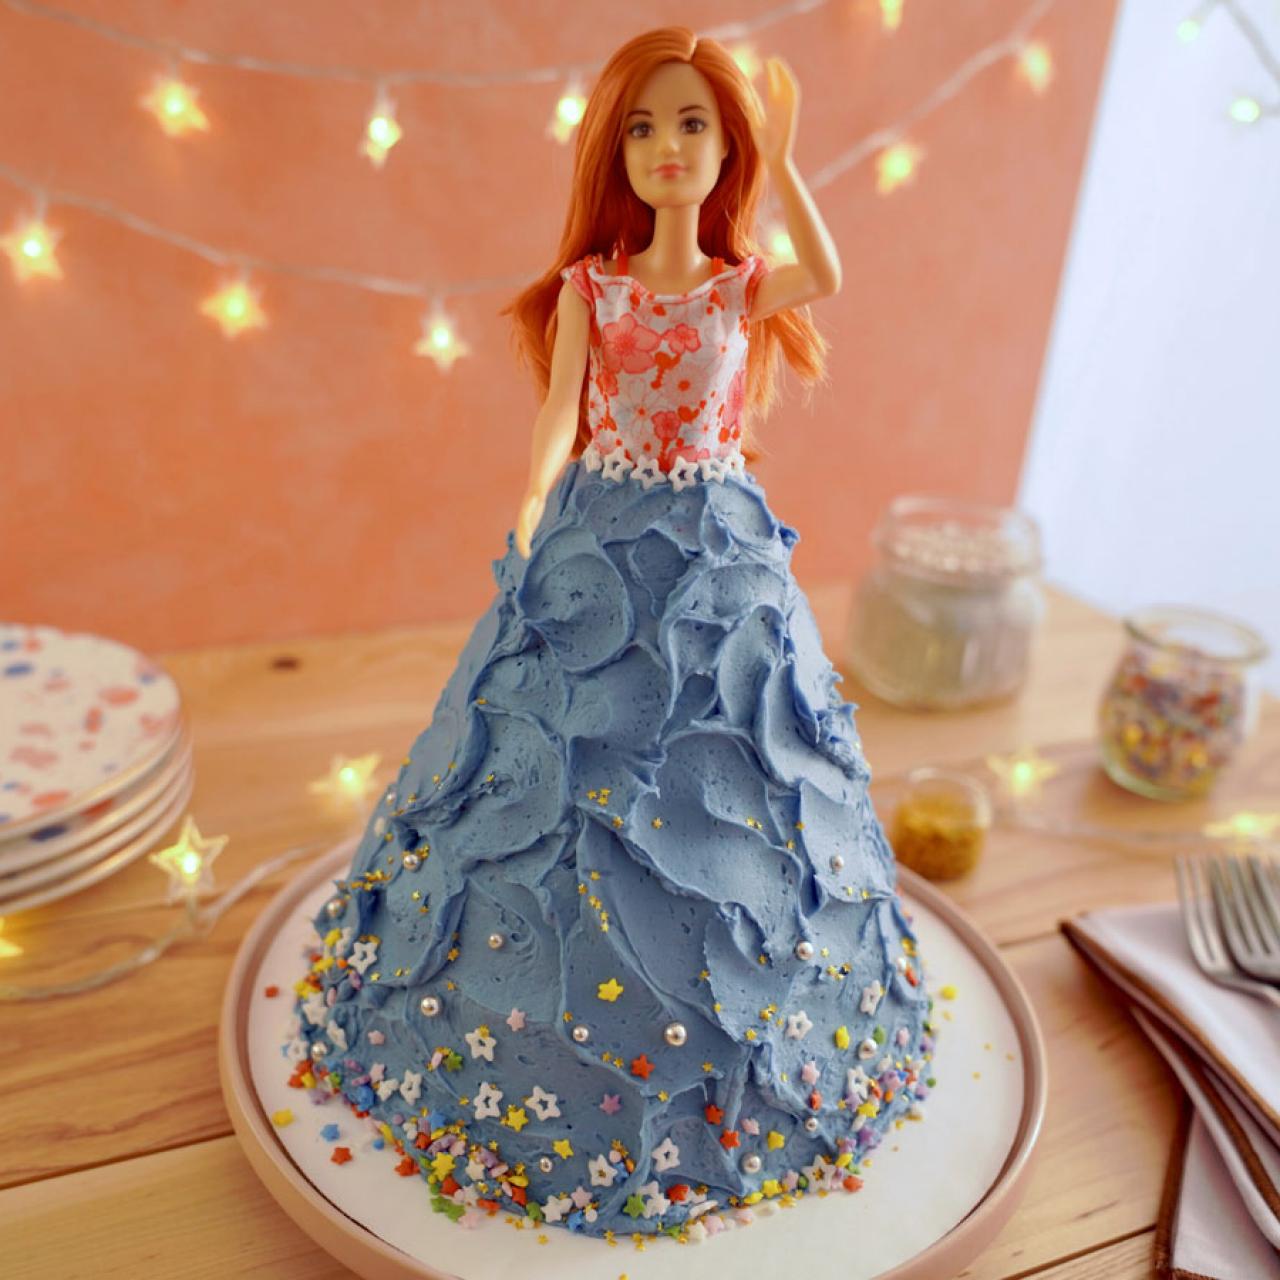 32+ Excellent Photo of Barbie Birthday Cake - birijus.com | Barbie doll  birthday cake, Doll birthday cake, Princess doll cake